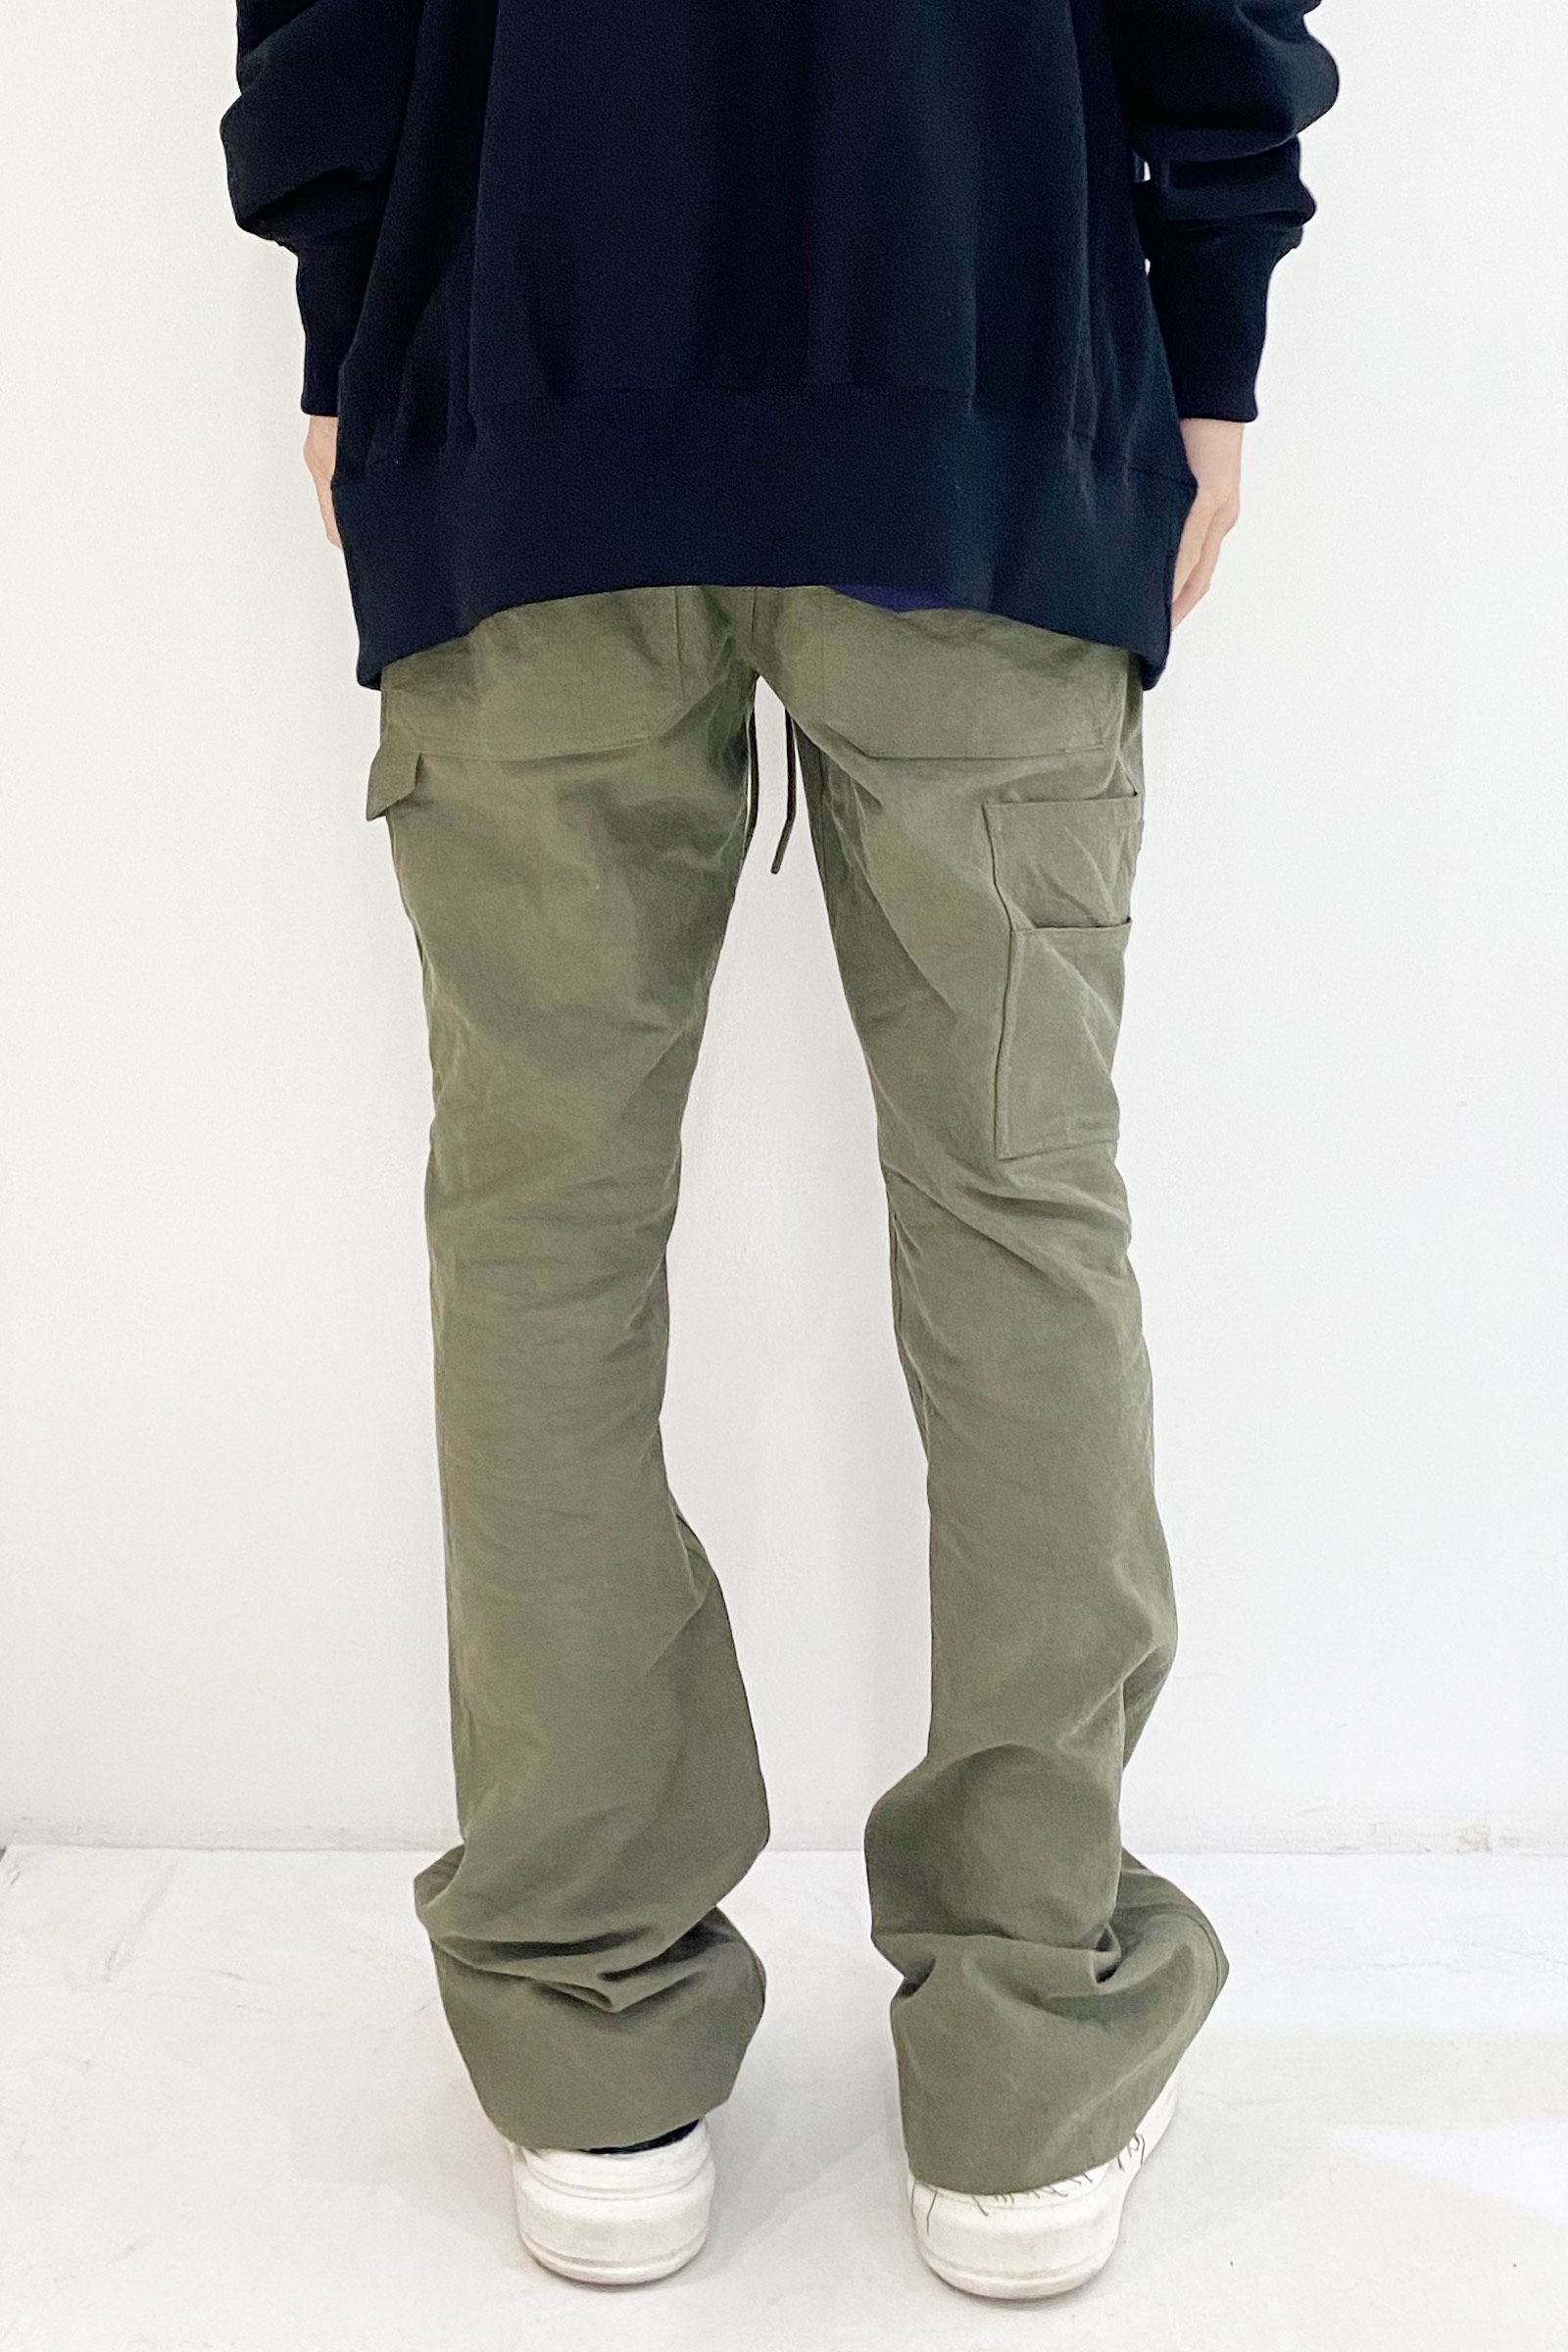 READYMADE - Work Pants (カーゴパンツ) Khaki | Detail